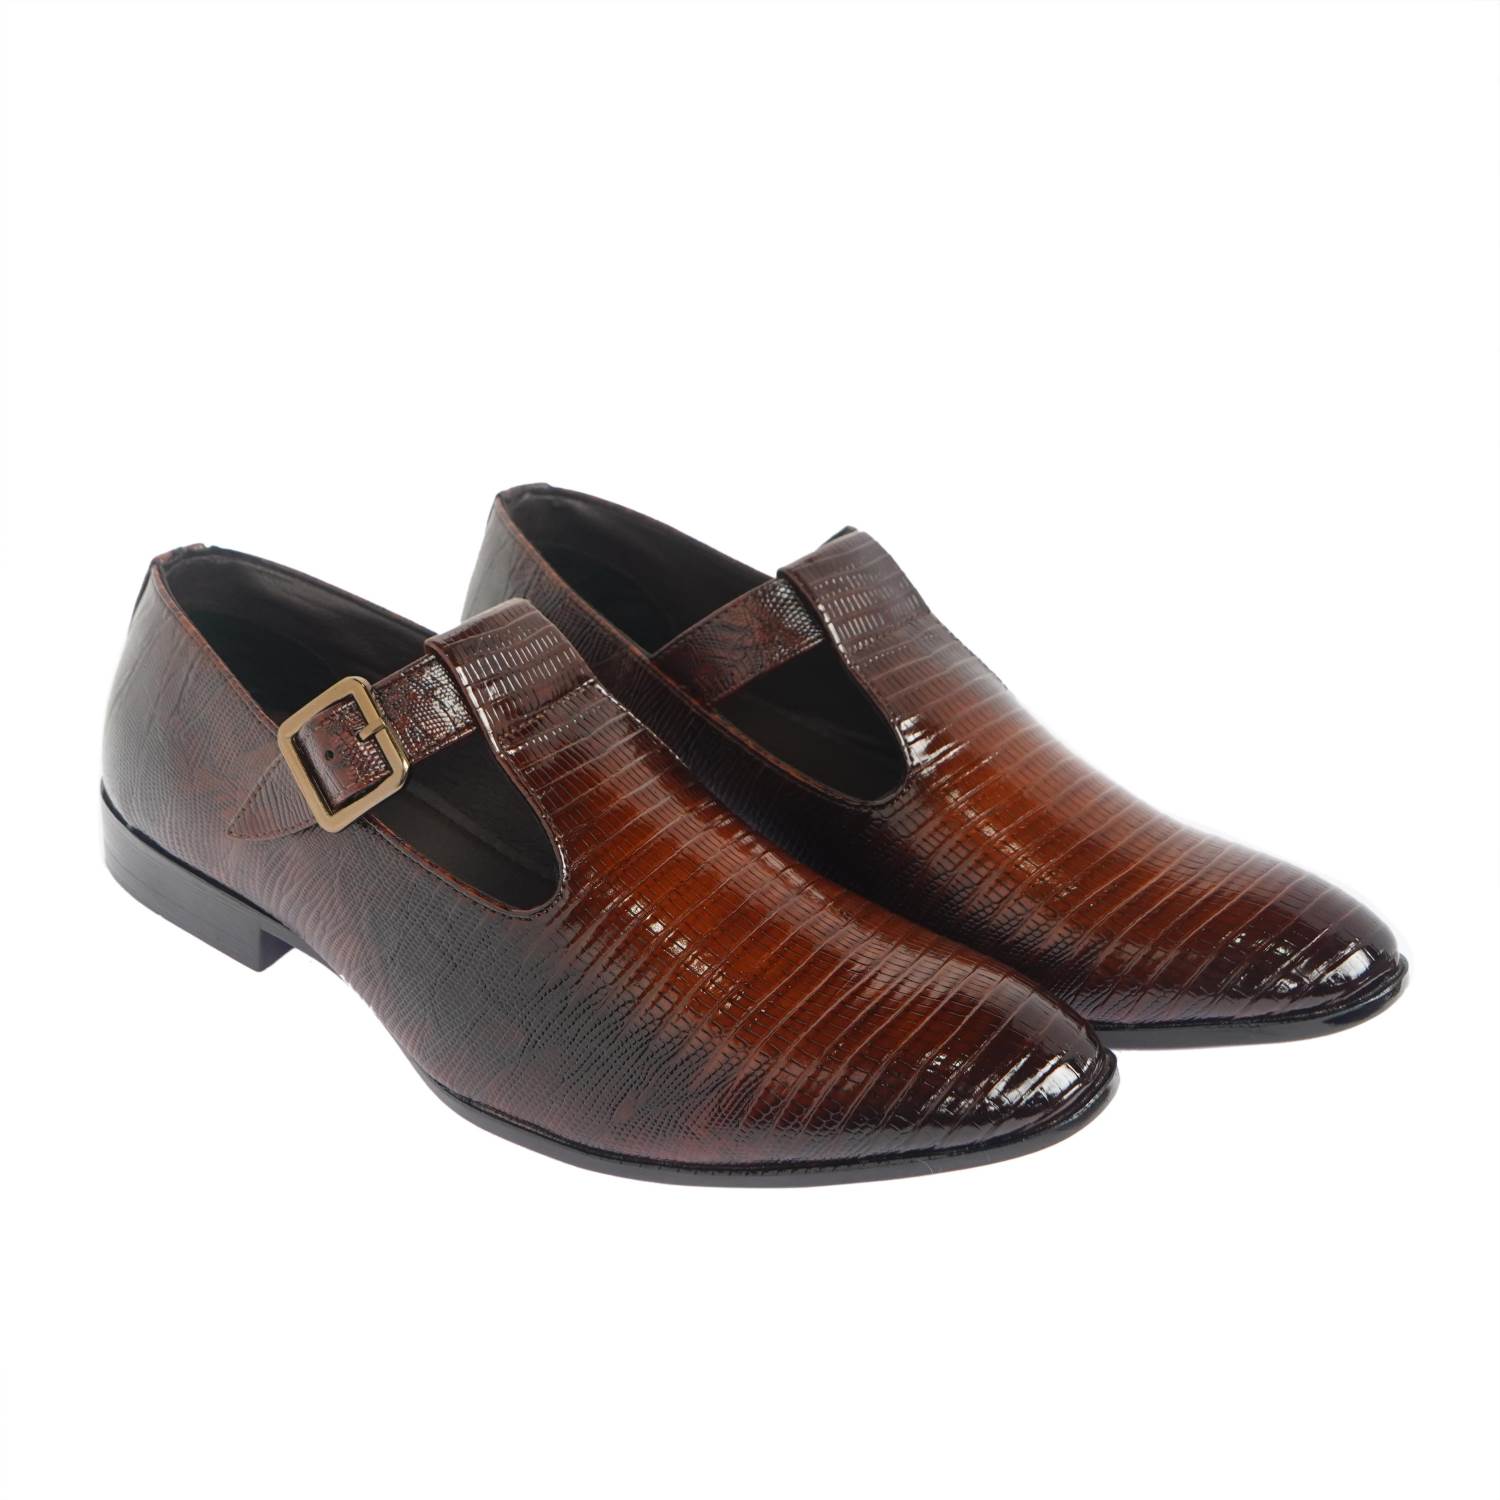 Mojari for Men - Buy Men Mojaris Online in India | Mochi shoes